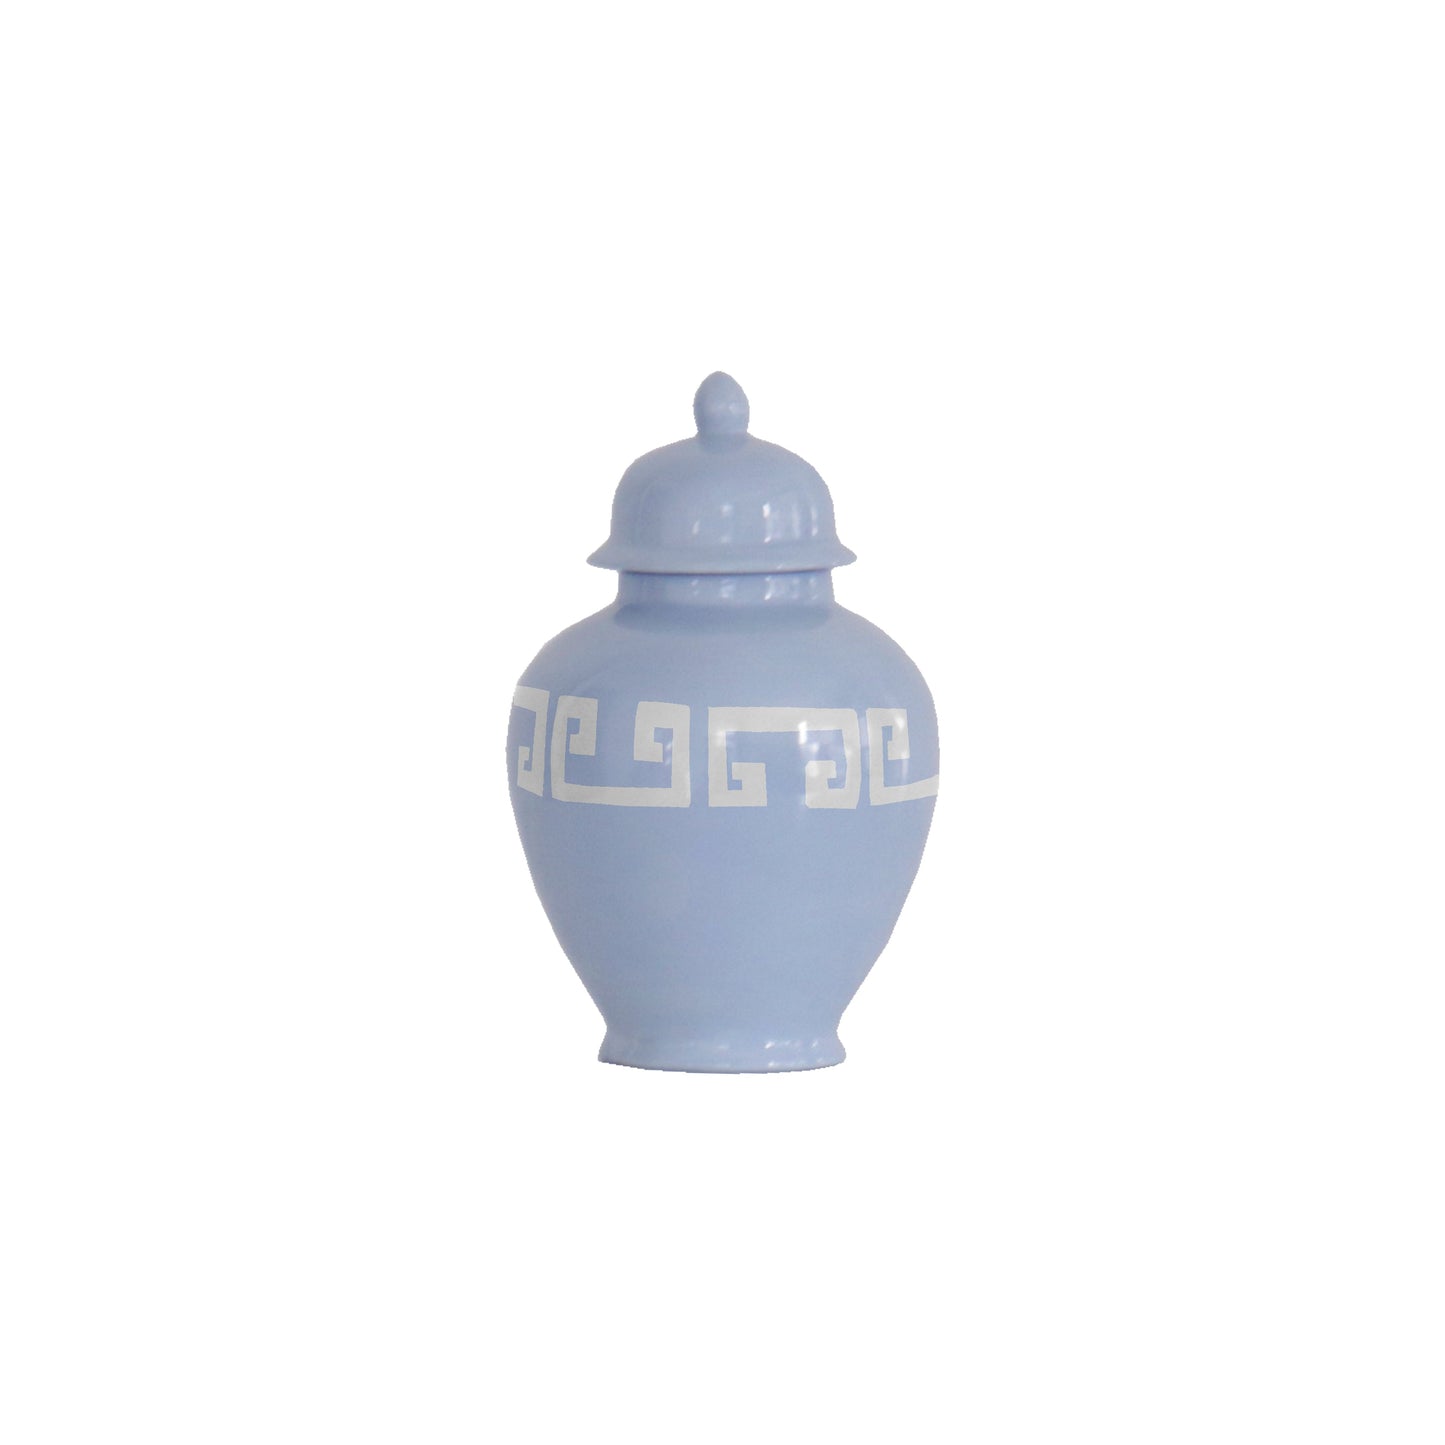 Serenity Blue Greek Key Ginger Jars | Wholesale